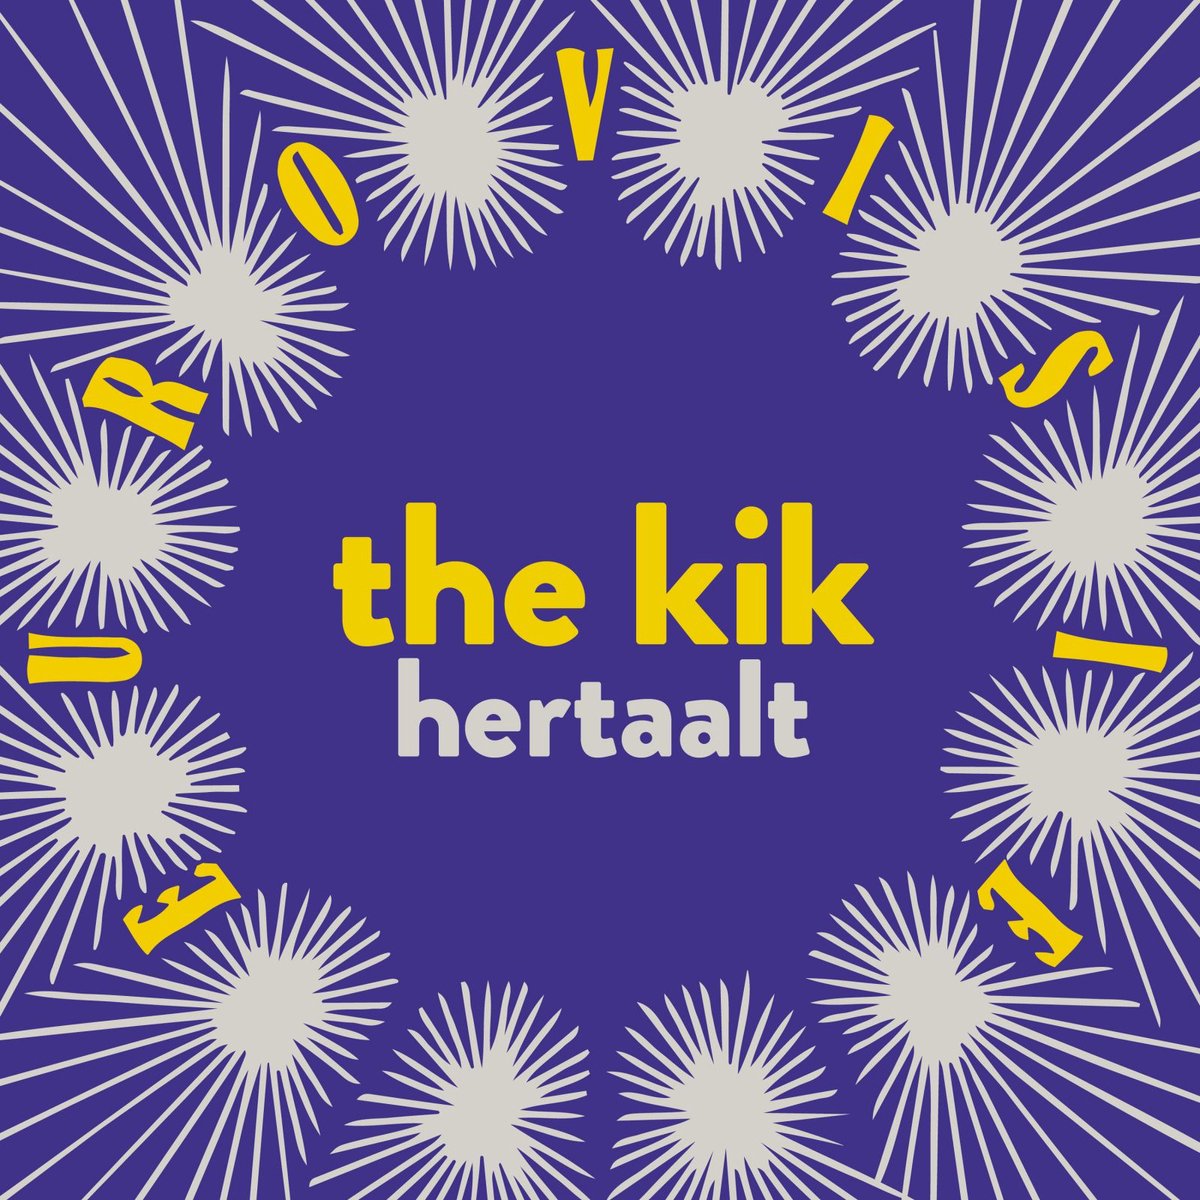 The Kik hertaalt Eurovisie (CD) - The Kik